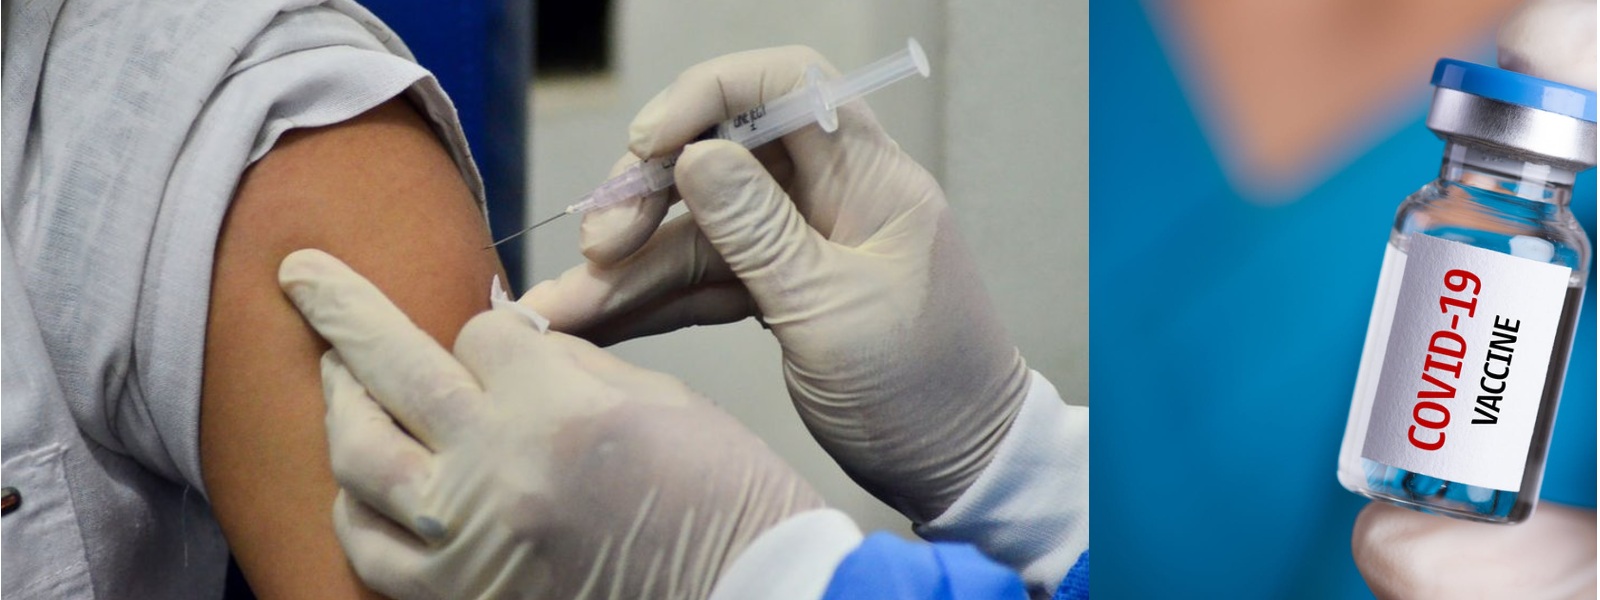 Sri Lanka, World Bank sign agreement for COVID-19 Vaccine Deployment